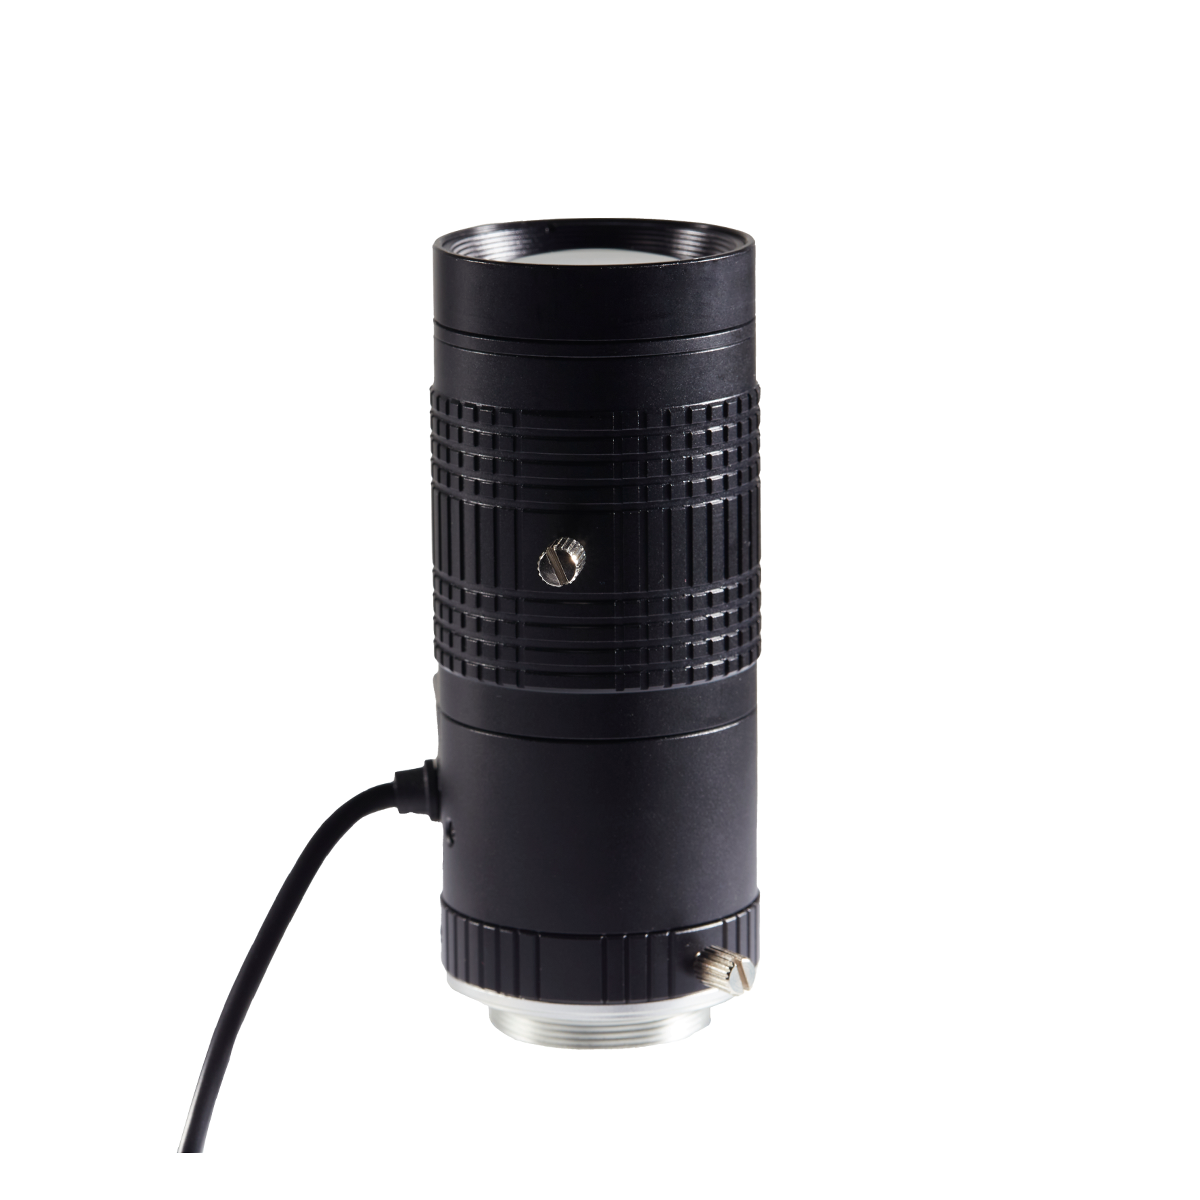 1/2" 30-120mm 长焦变焦镜头 CS接口 电动光圈  手动变焦 工业镜头 F1.8光圈 CH944A